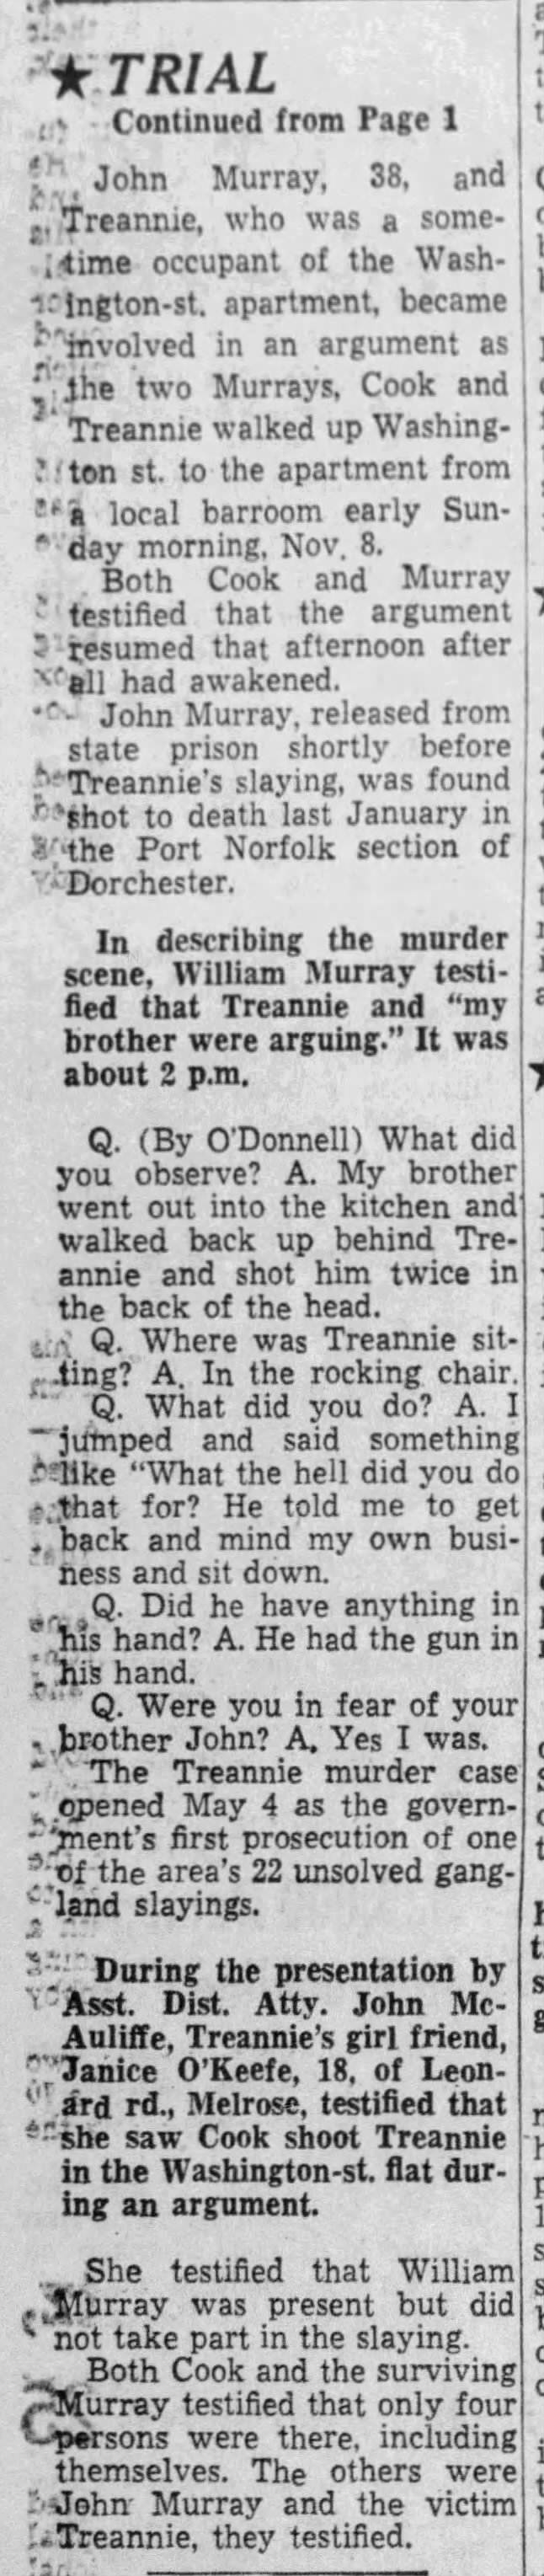 Treannie trial (15 May 1965)